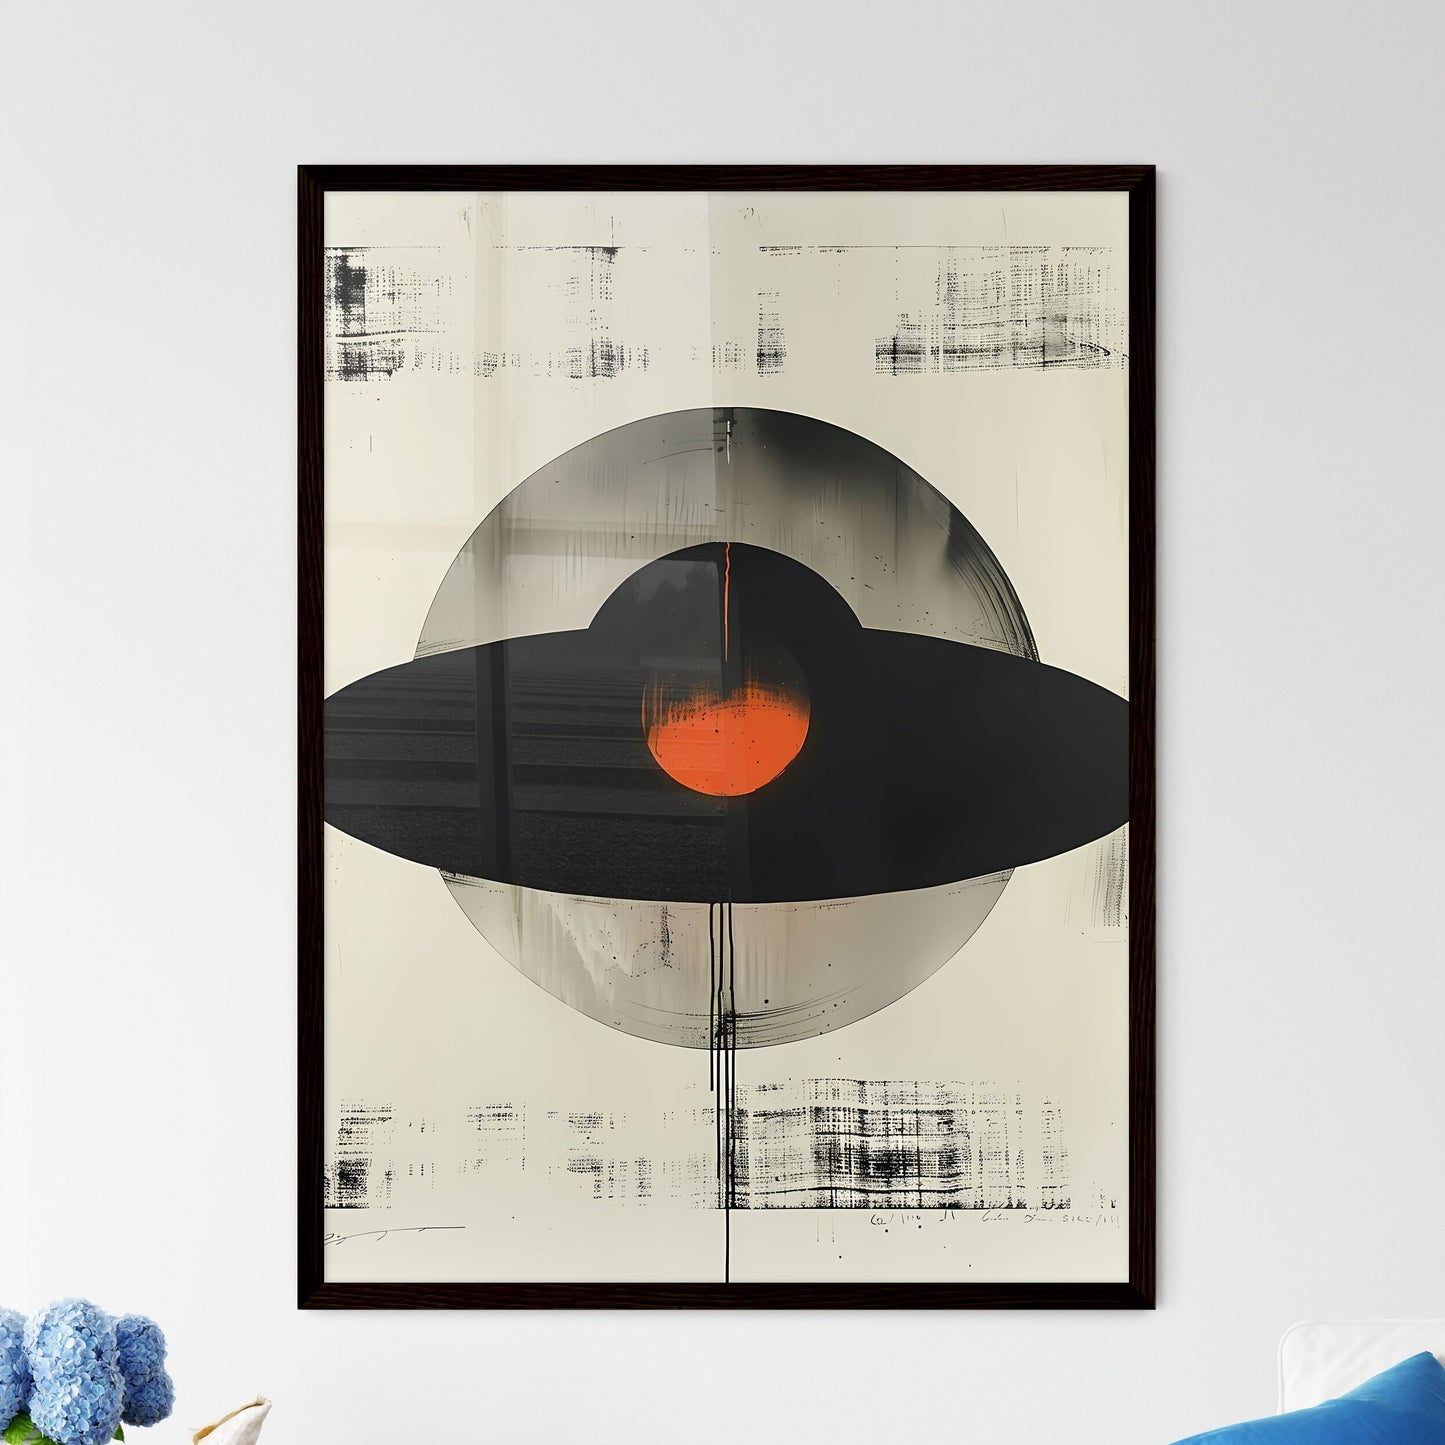 Striking Minimalist Saucer Artwork: Abstract Block Print with Vibrant Black and Orange Circles Default Title